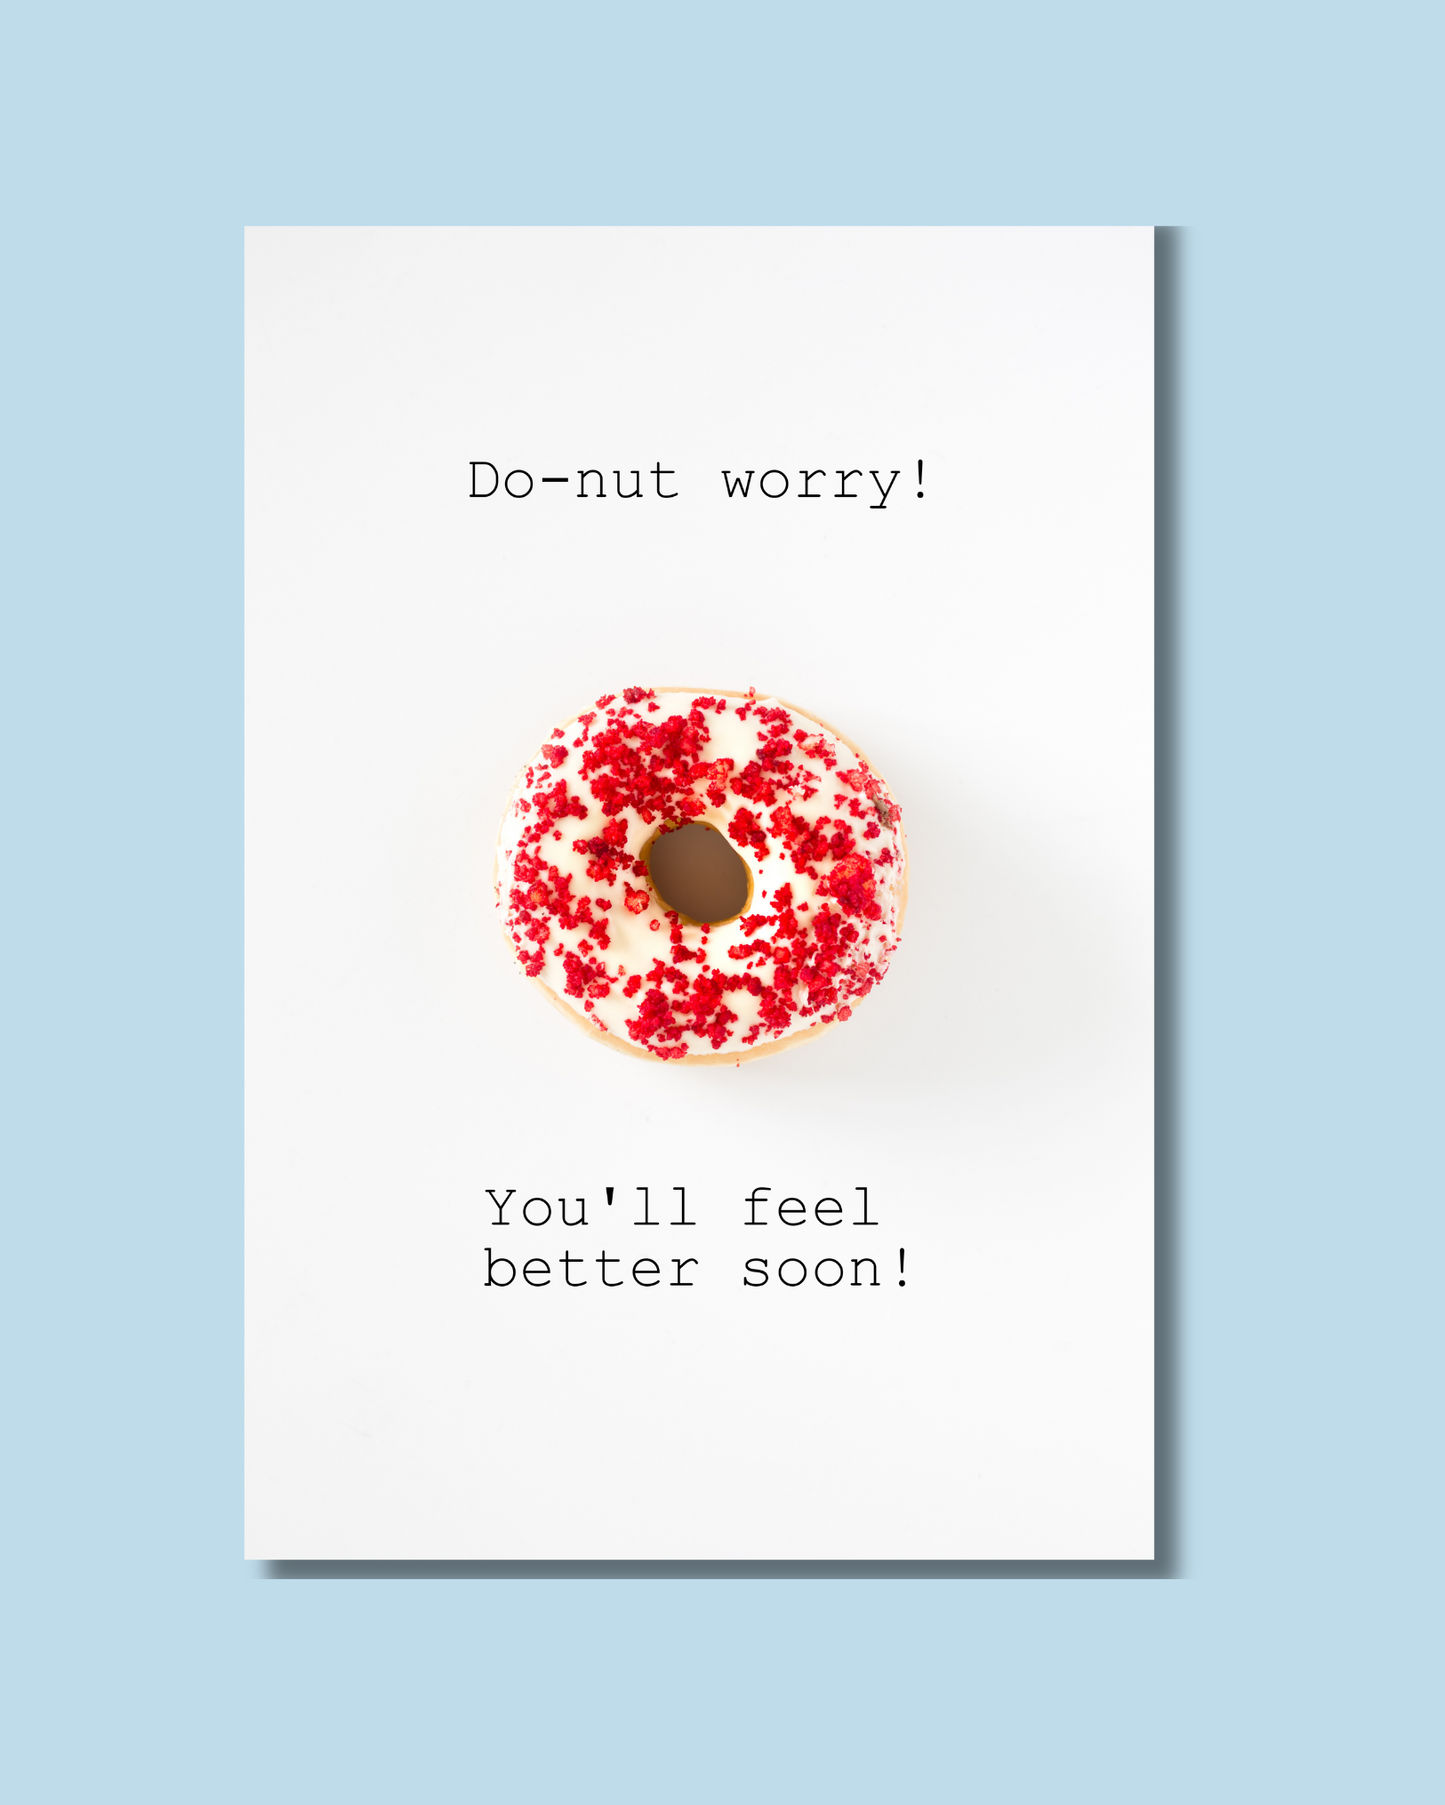 Do-nut worry! You'll feel better soon!